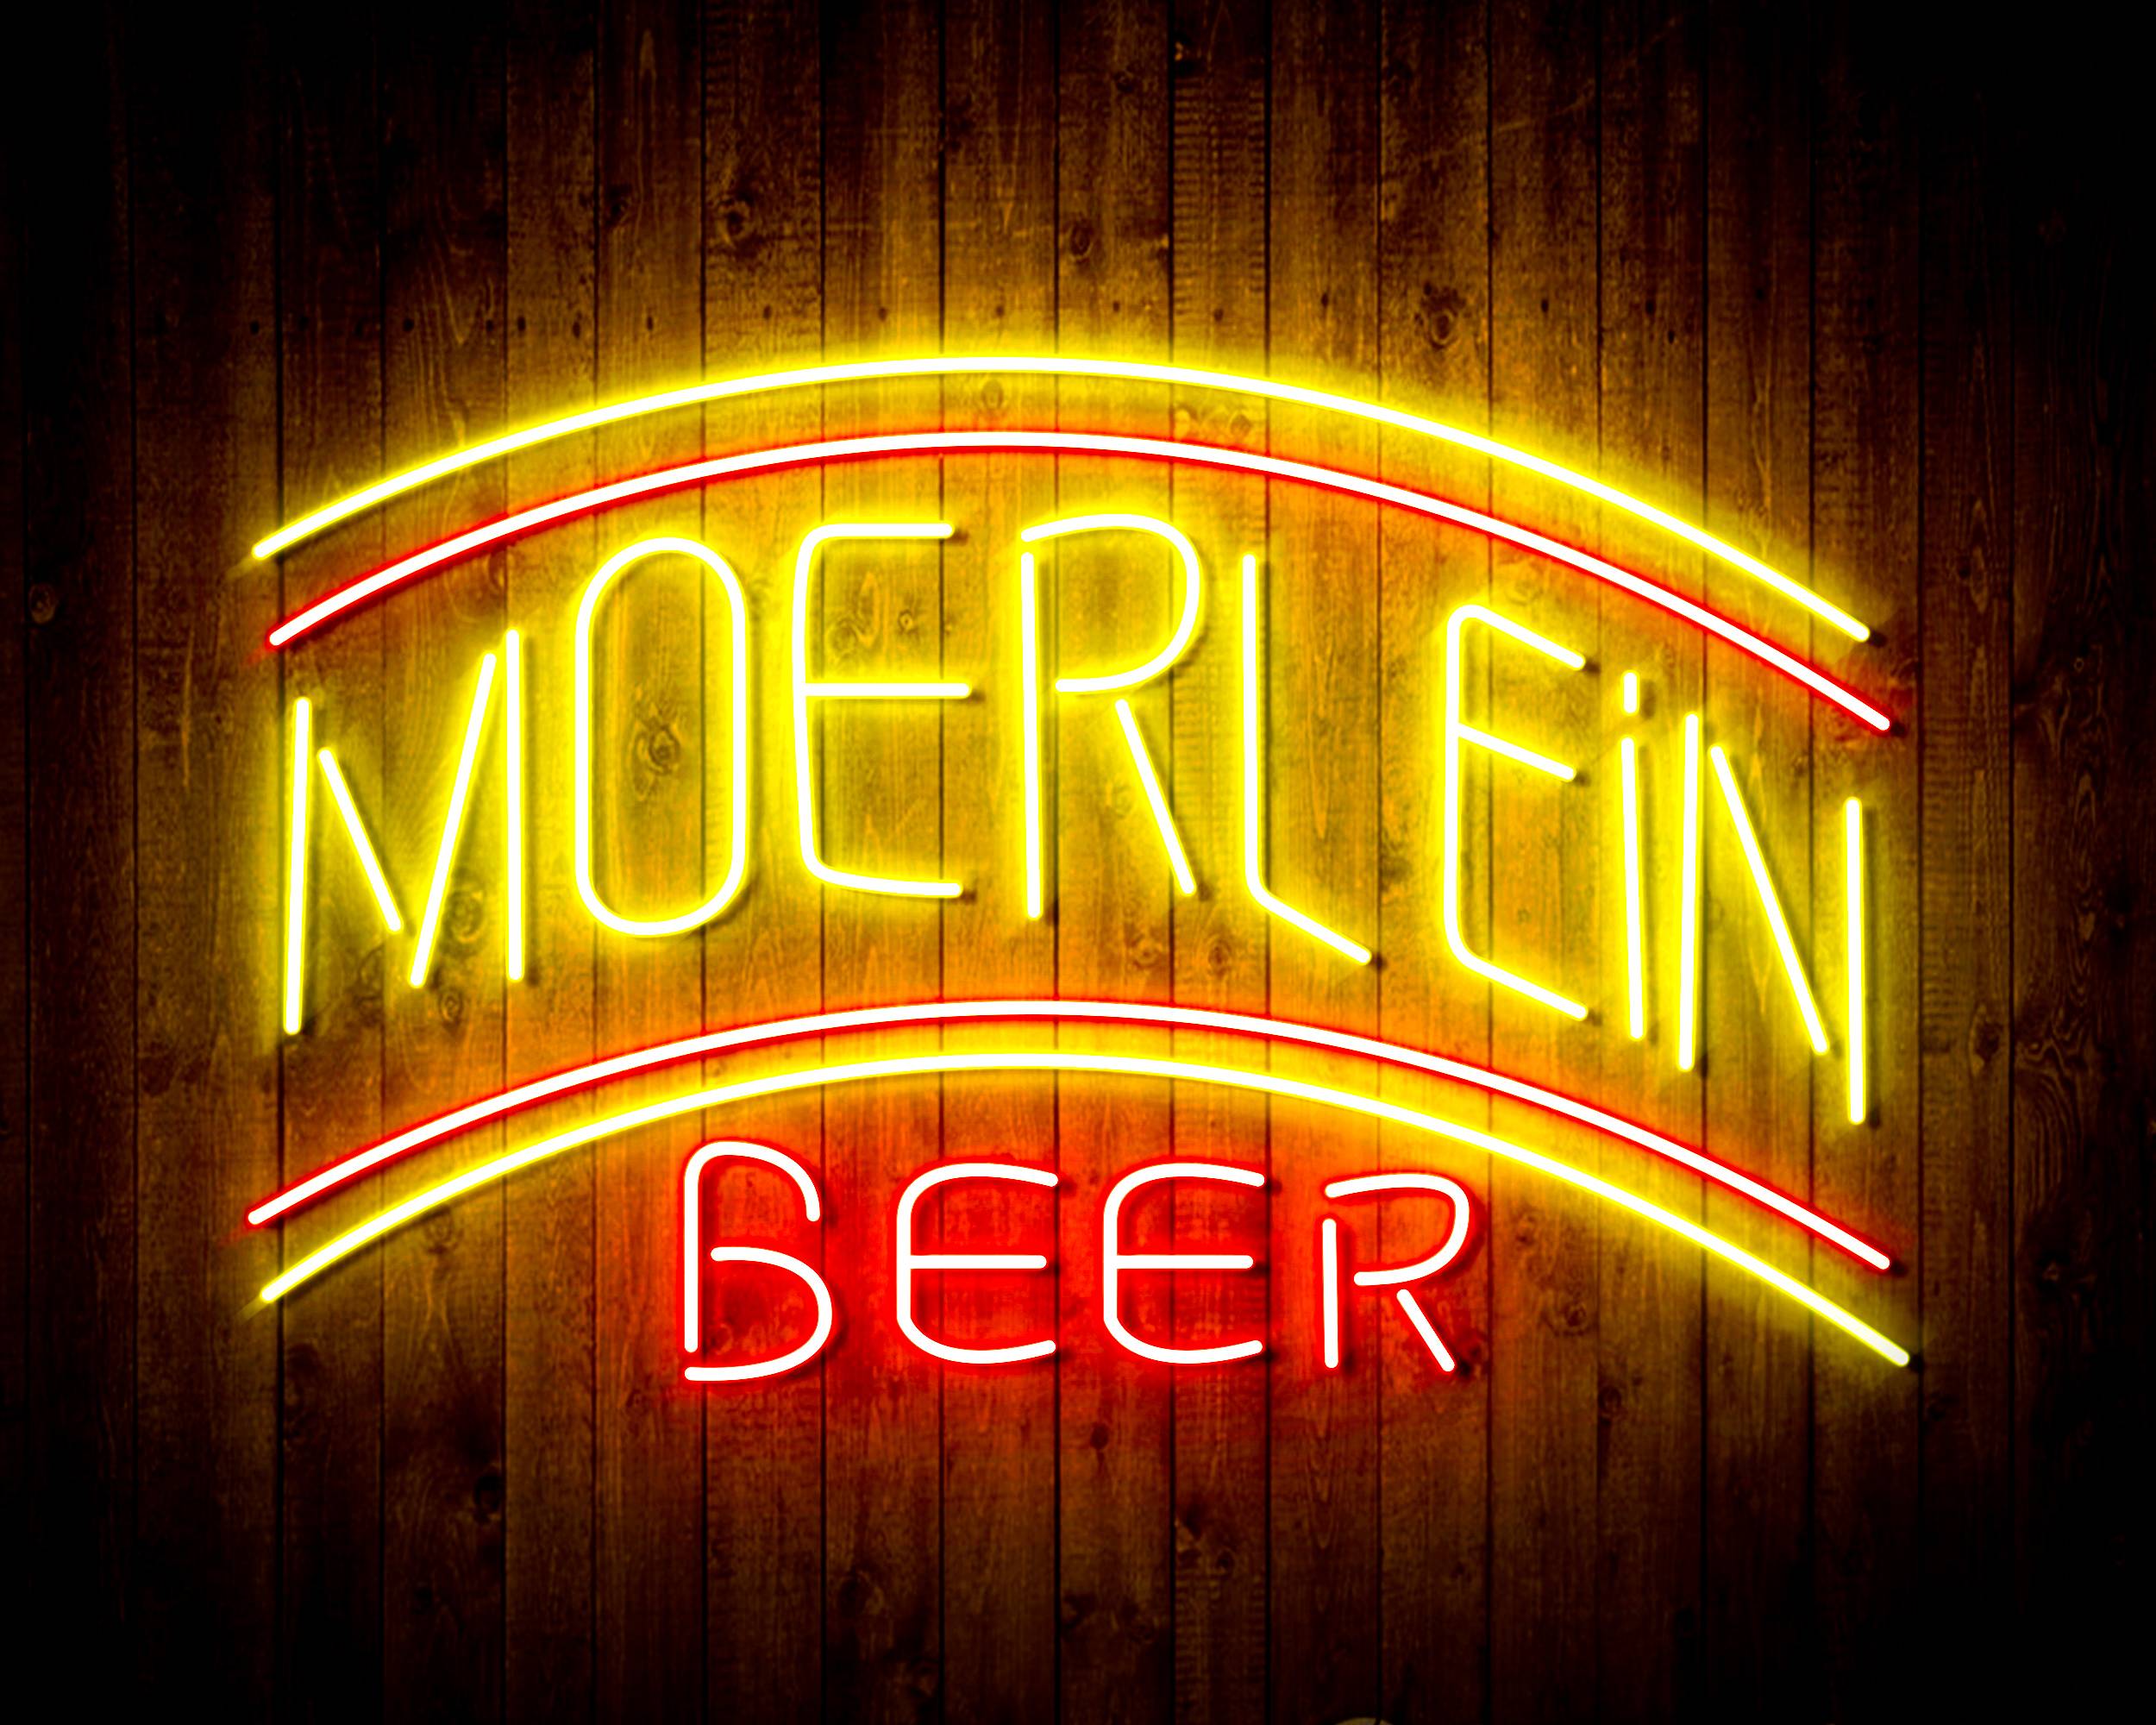 Moerlein Beer Handmade LED Neon Light Sign